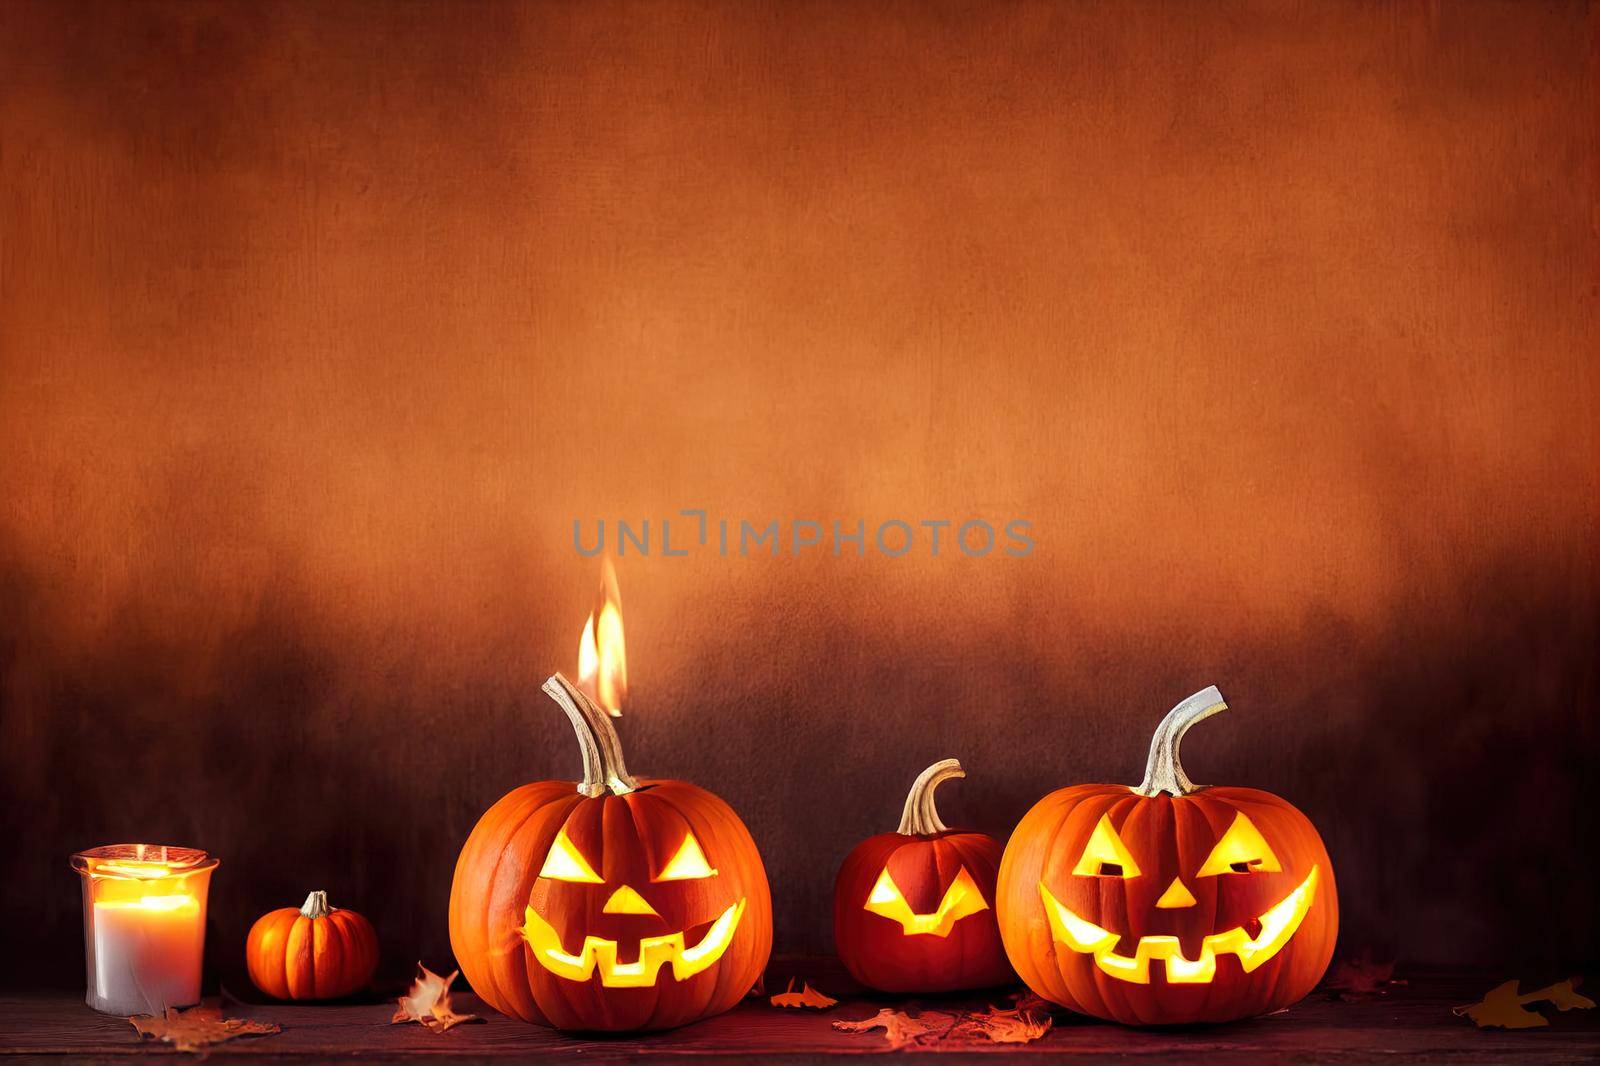 Halloween pumpkin head jack o lantern with burning fire by 2ragon